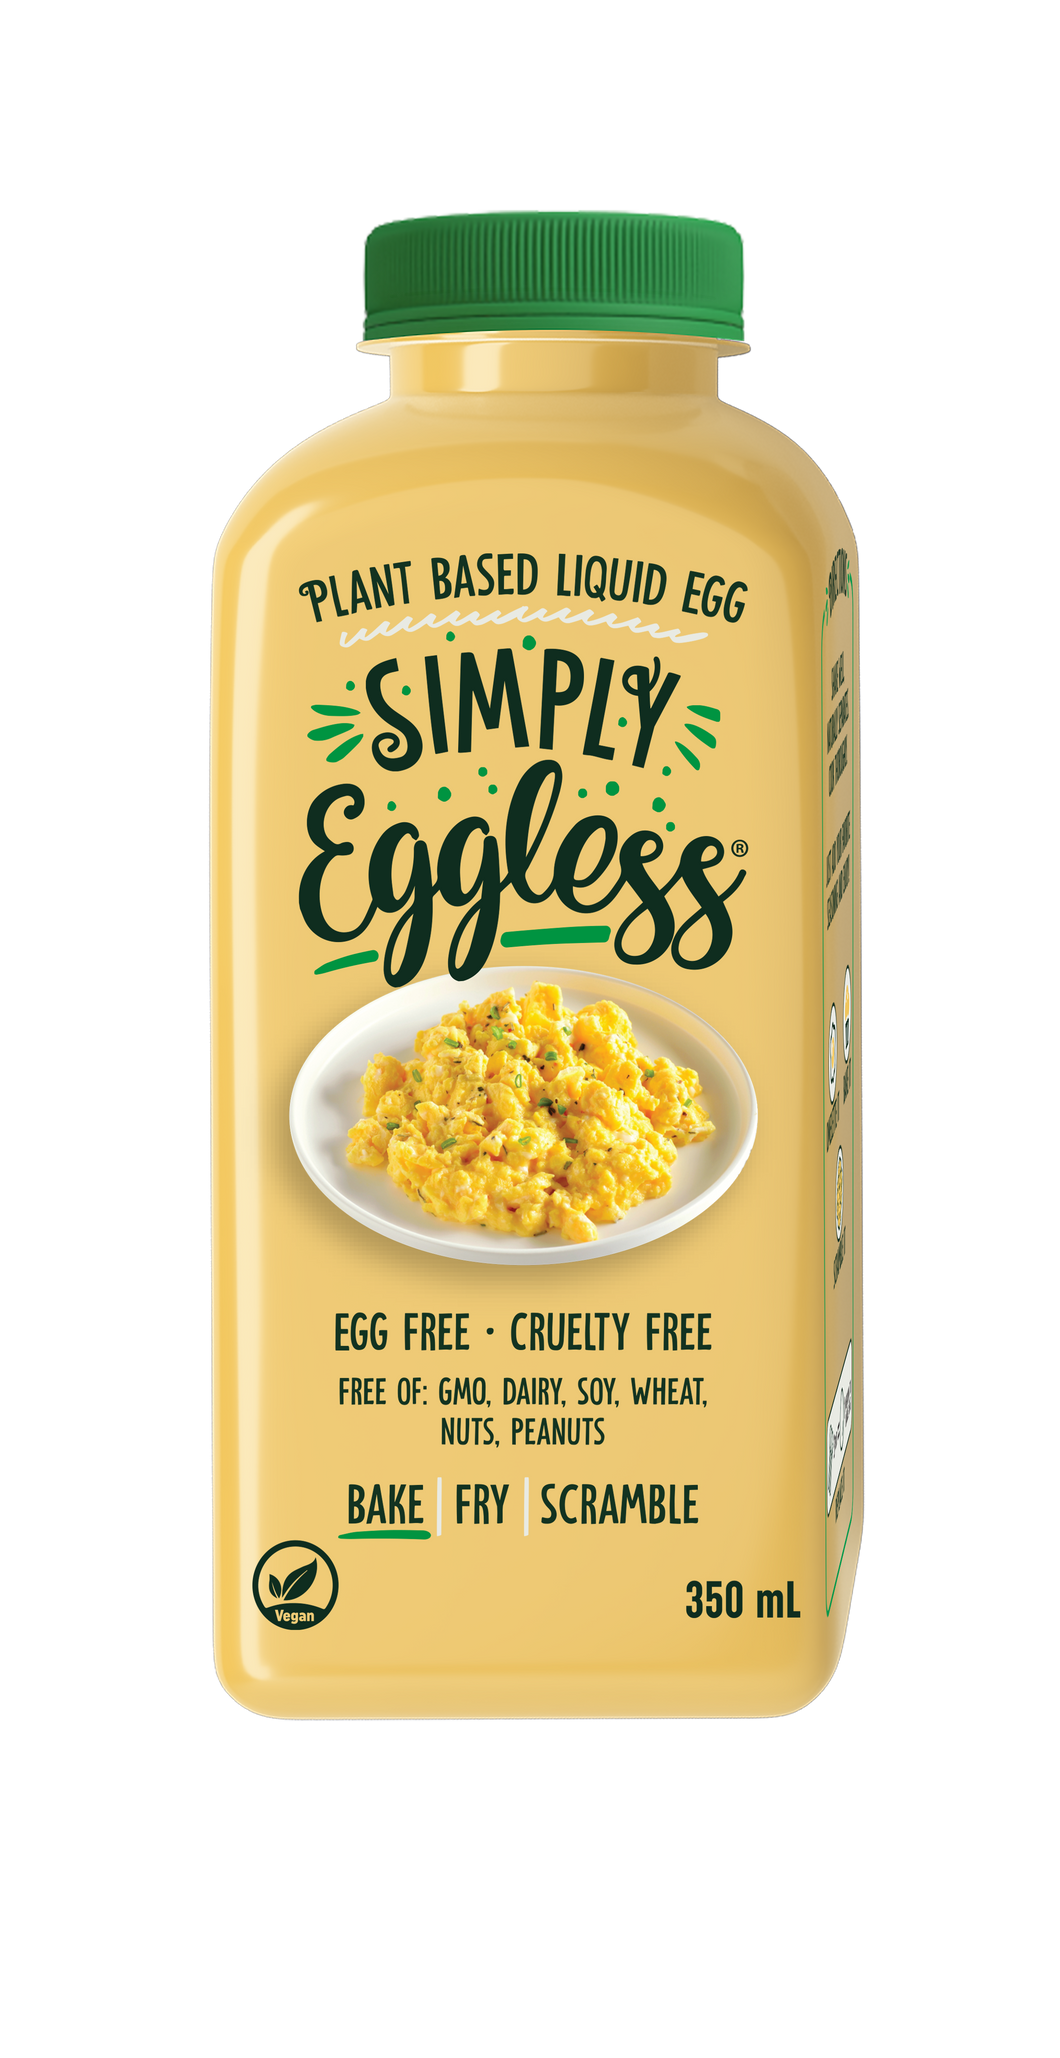 Simply Eggless - Plant Based Liquid Egg - 350ml